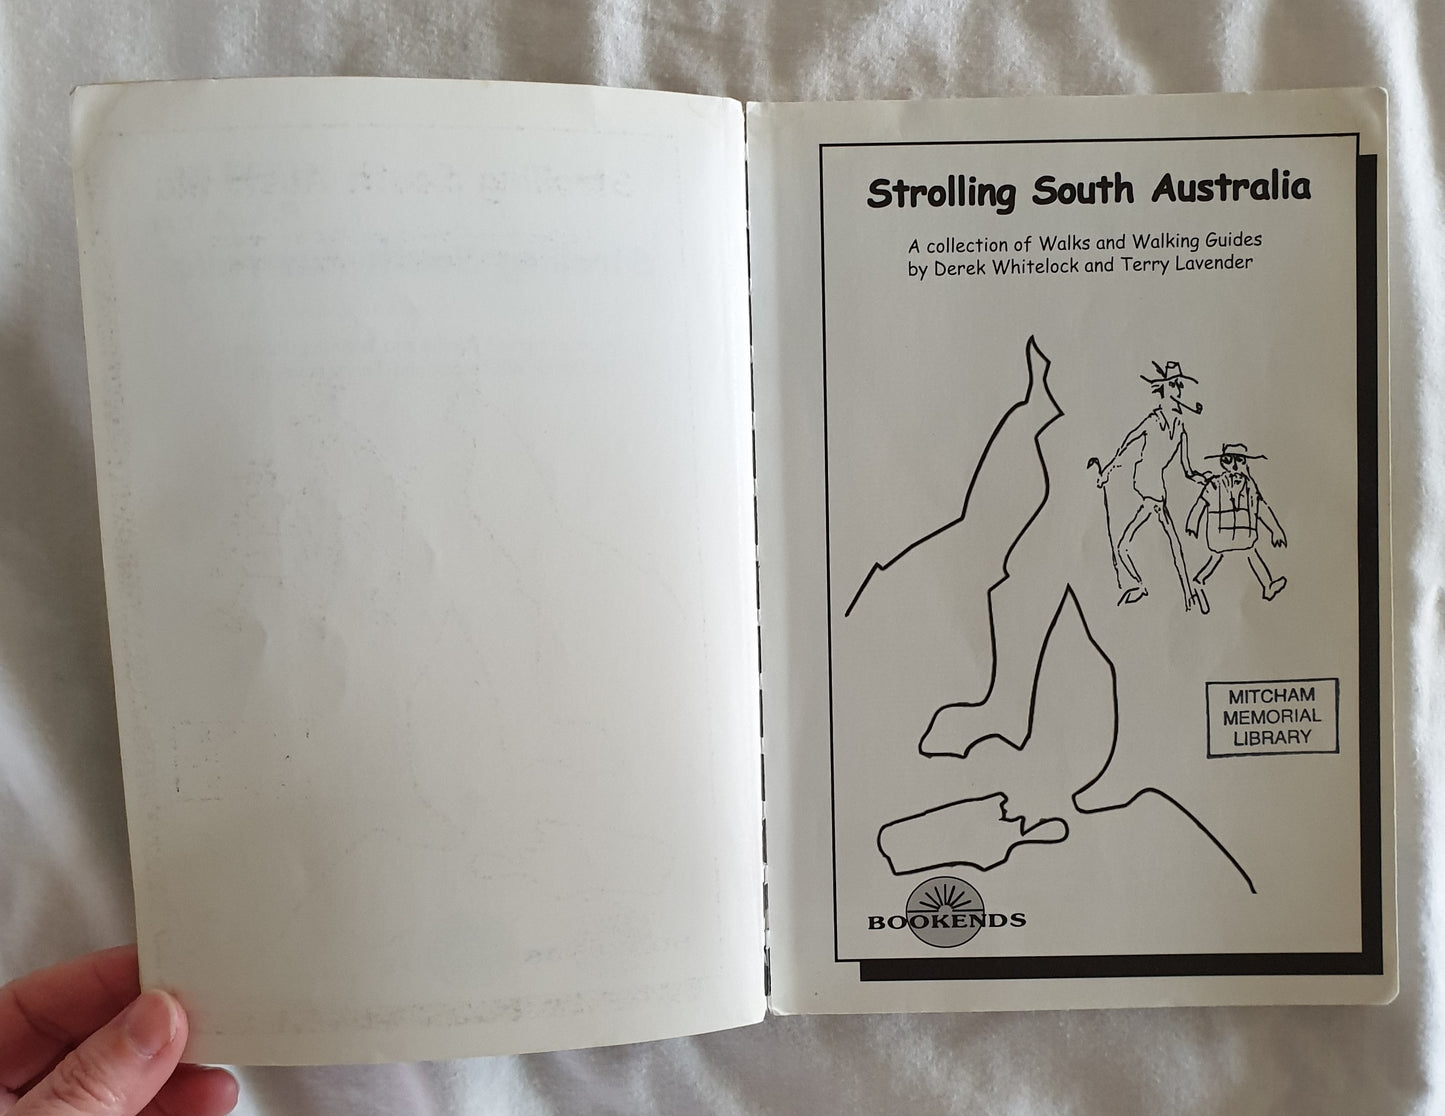 Strolling South Australia by Derek Whitelock and Terry Lavender